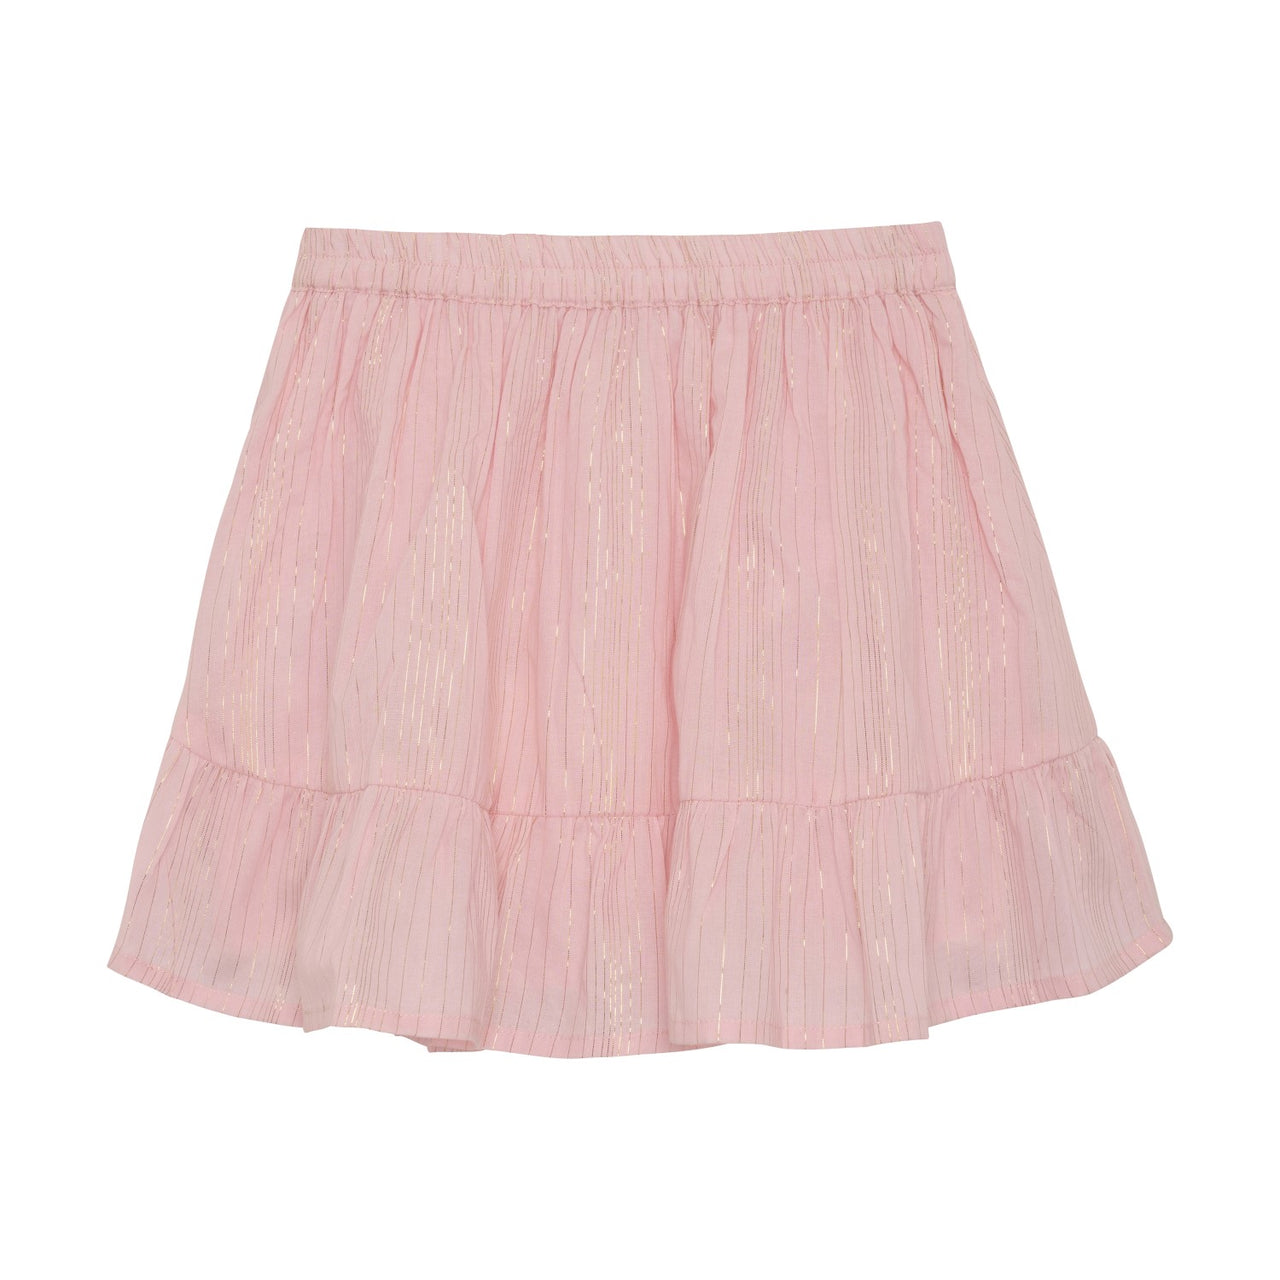 Blush Rose Skirt